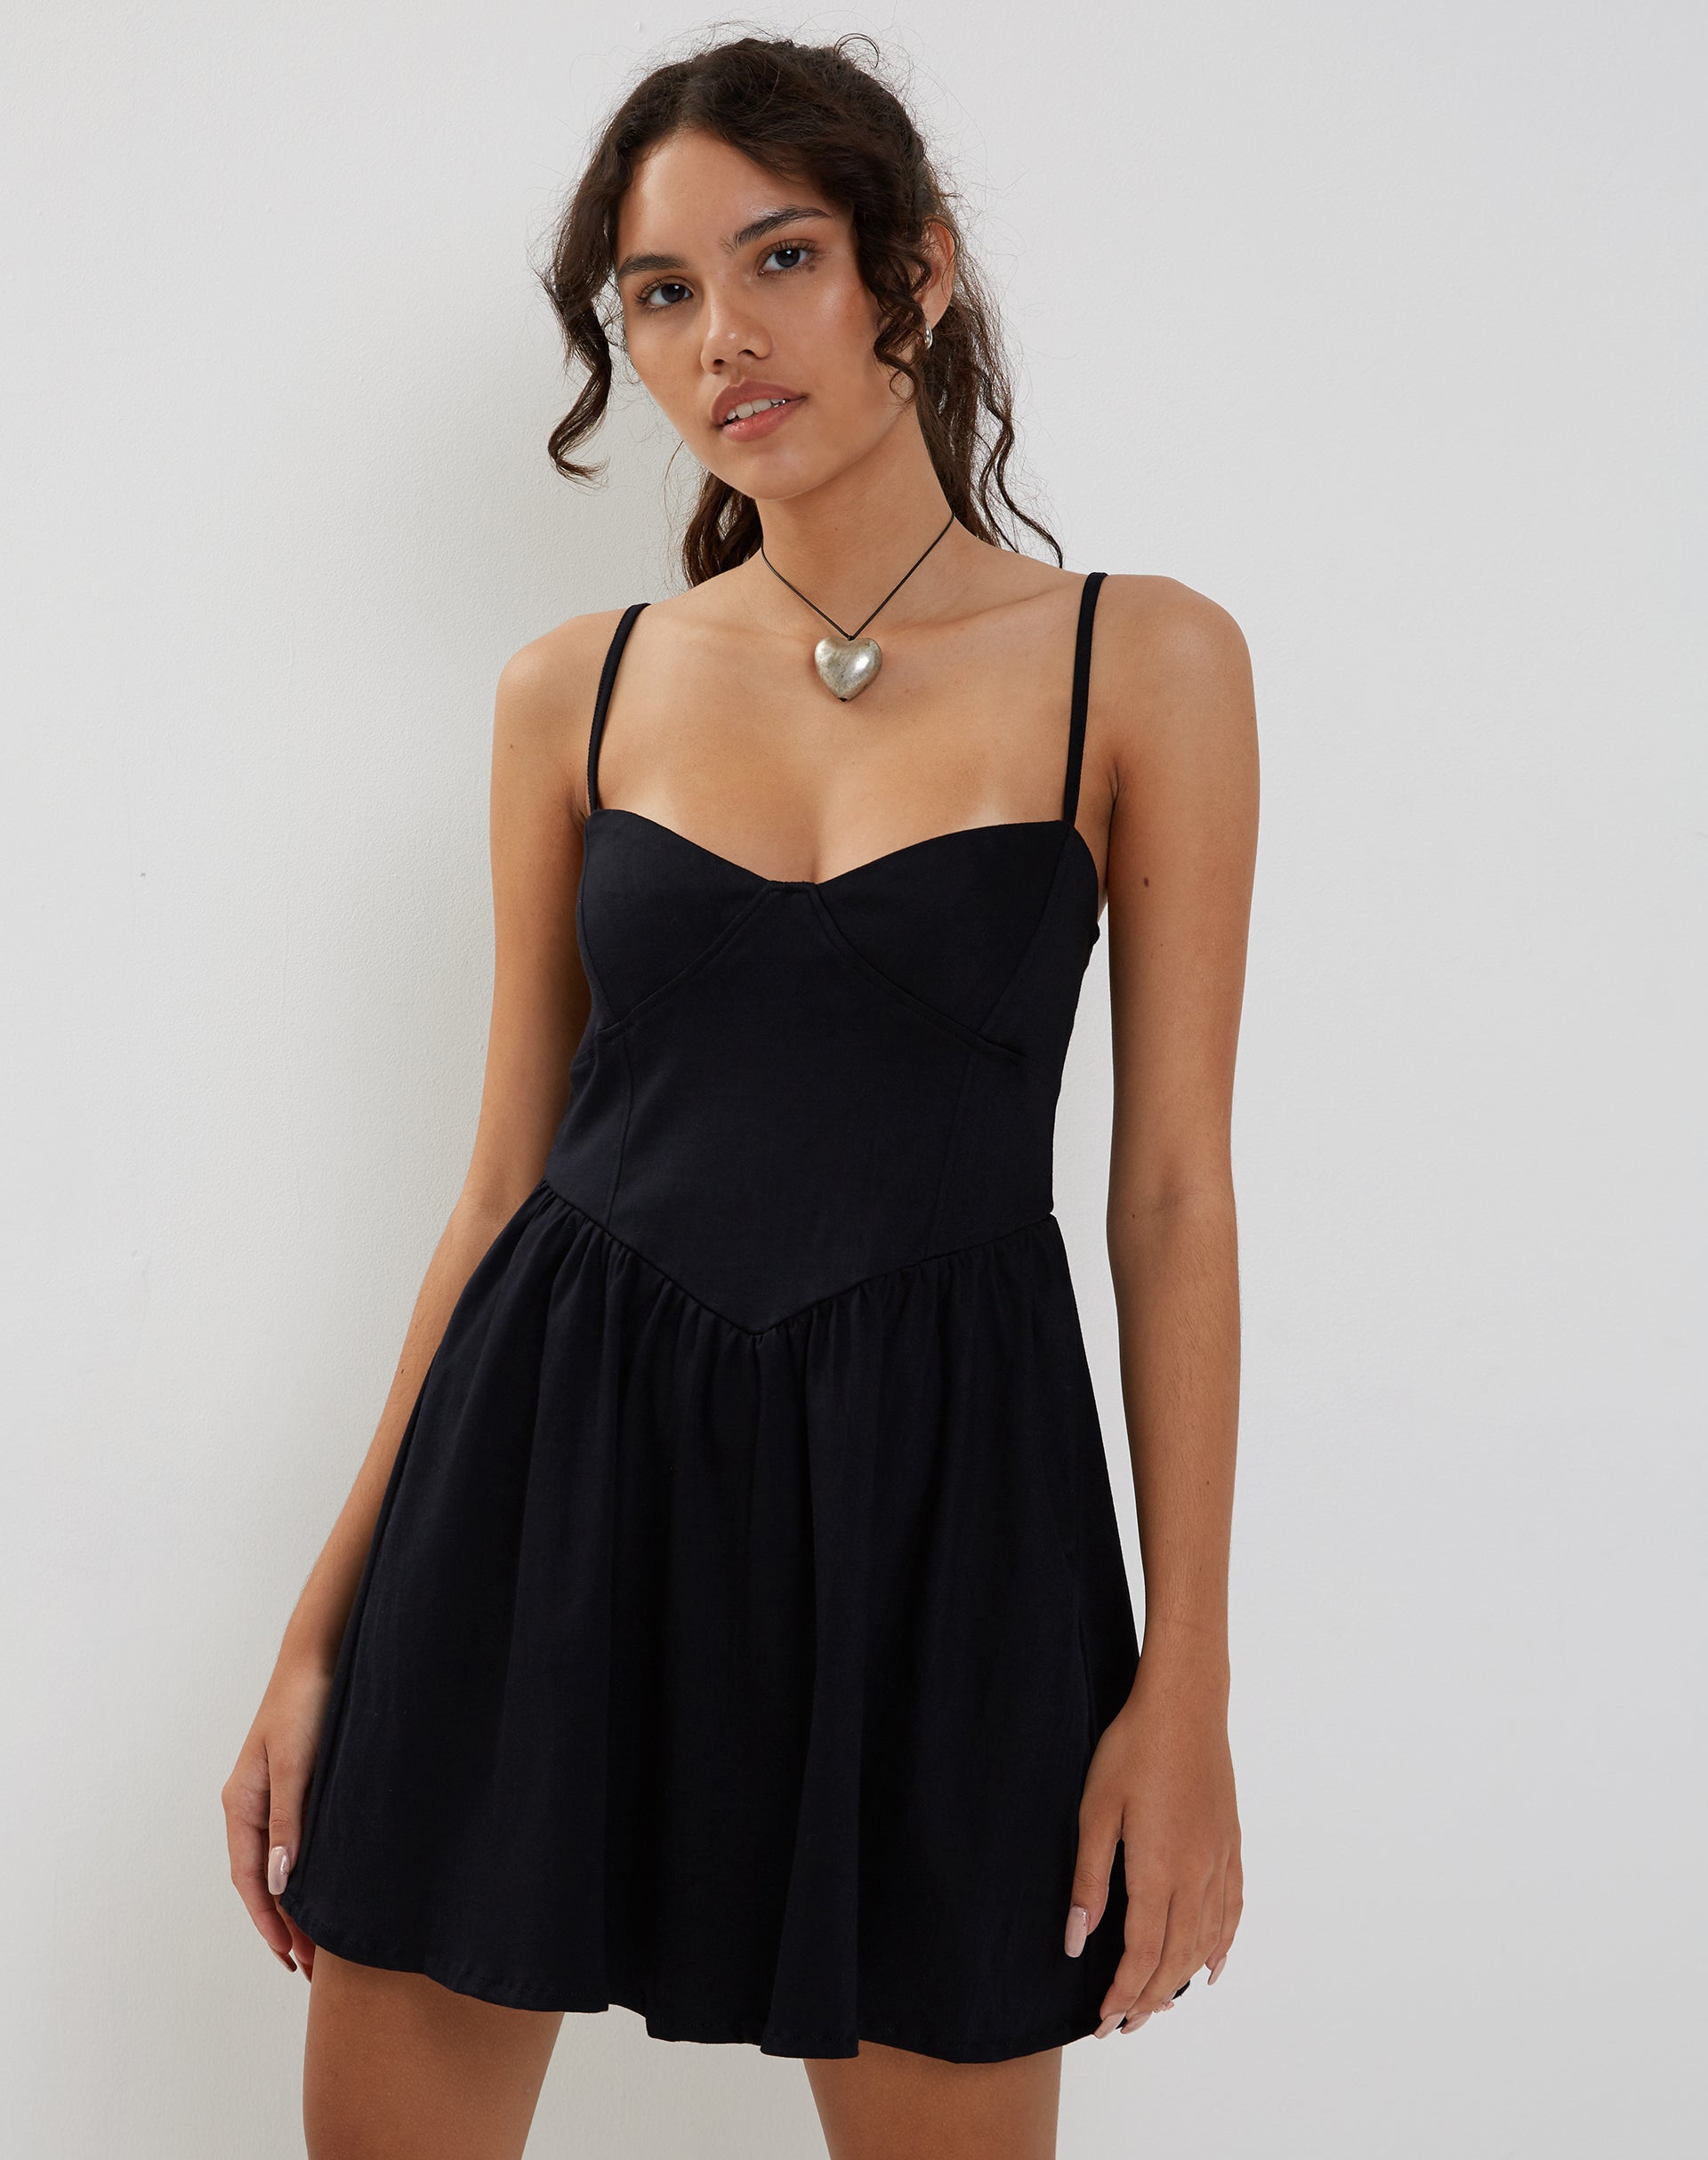 Delray Long Sleeve Bodycon Dress in Lycra Black